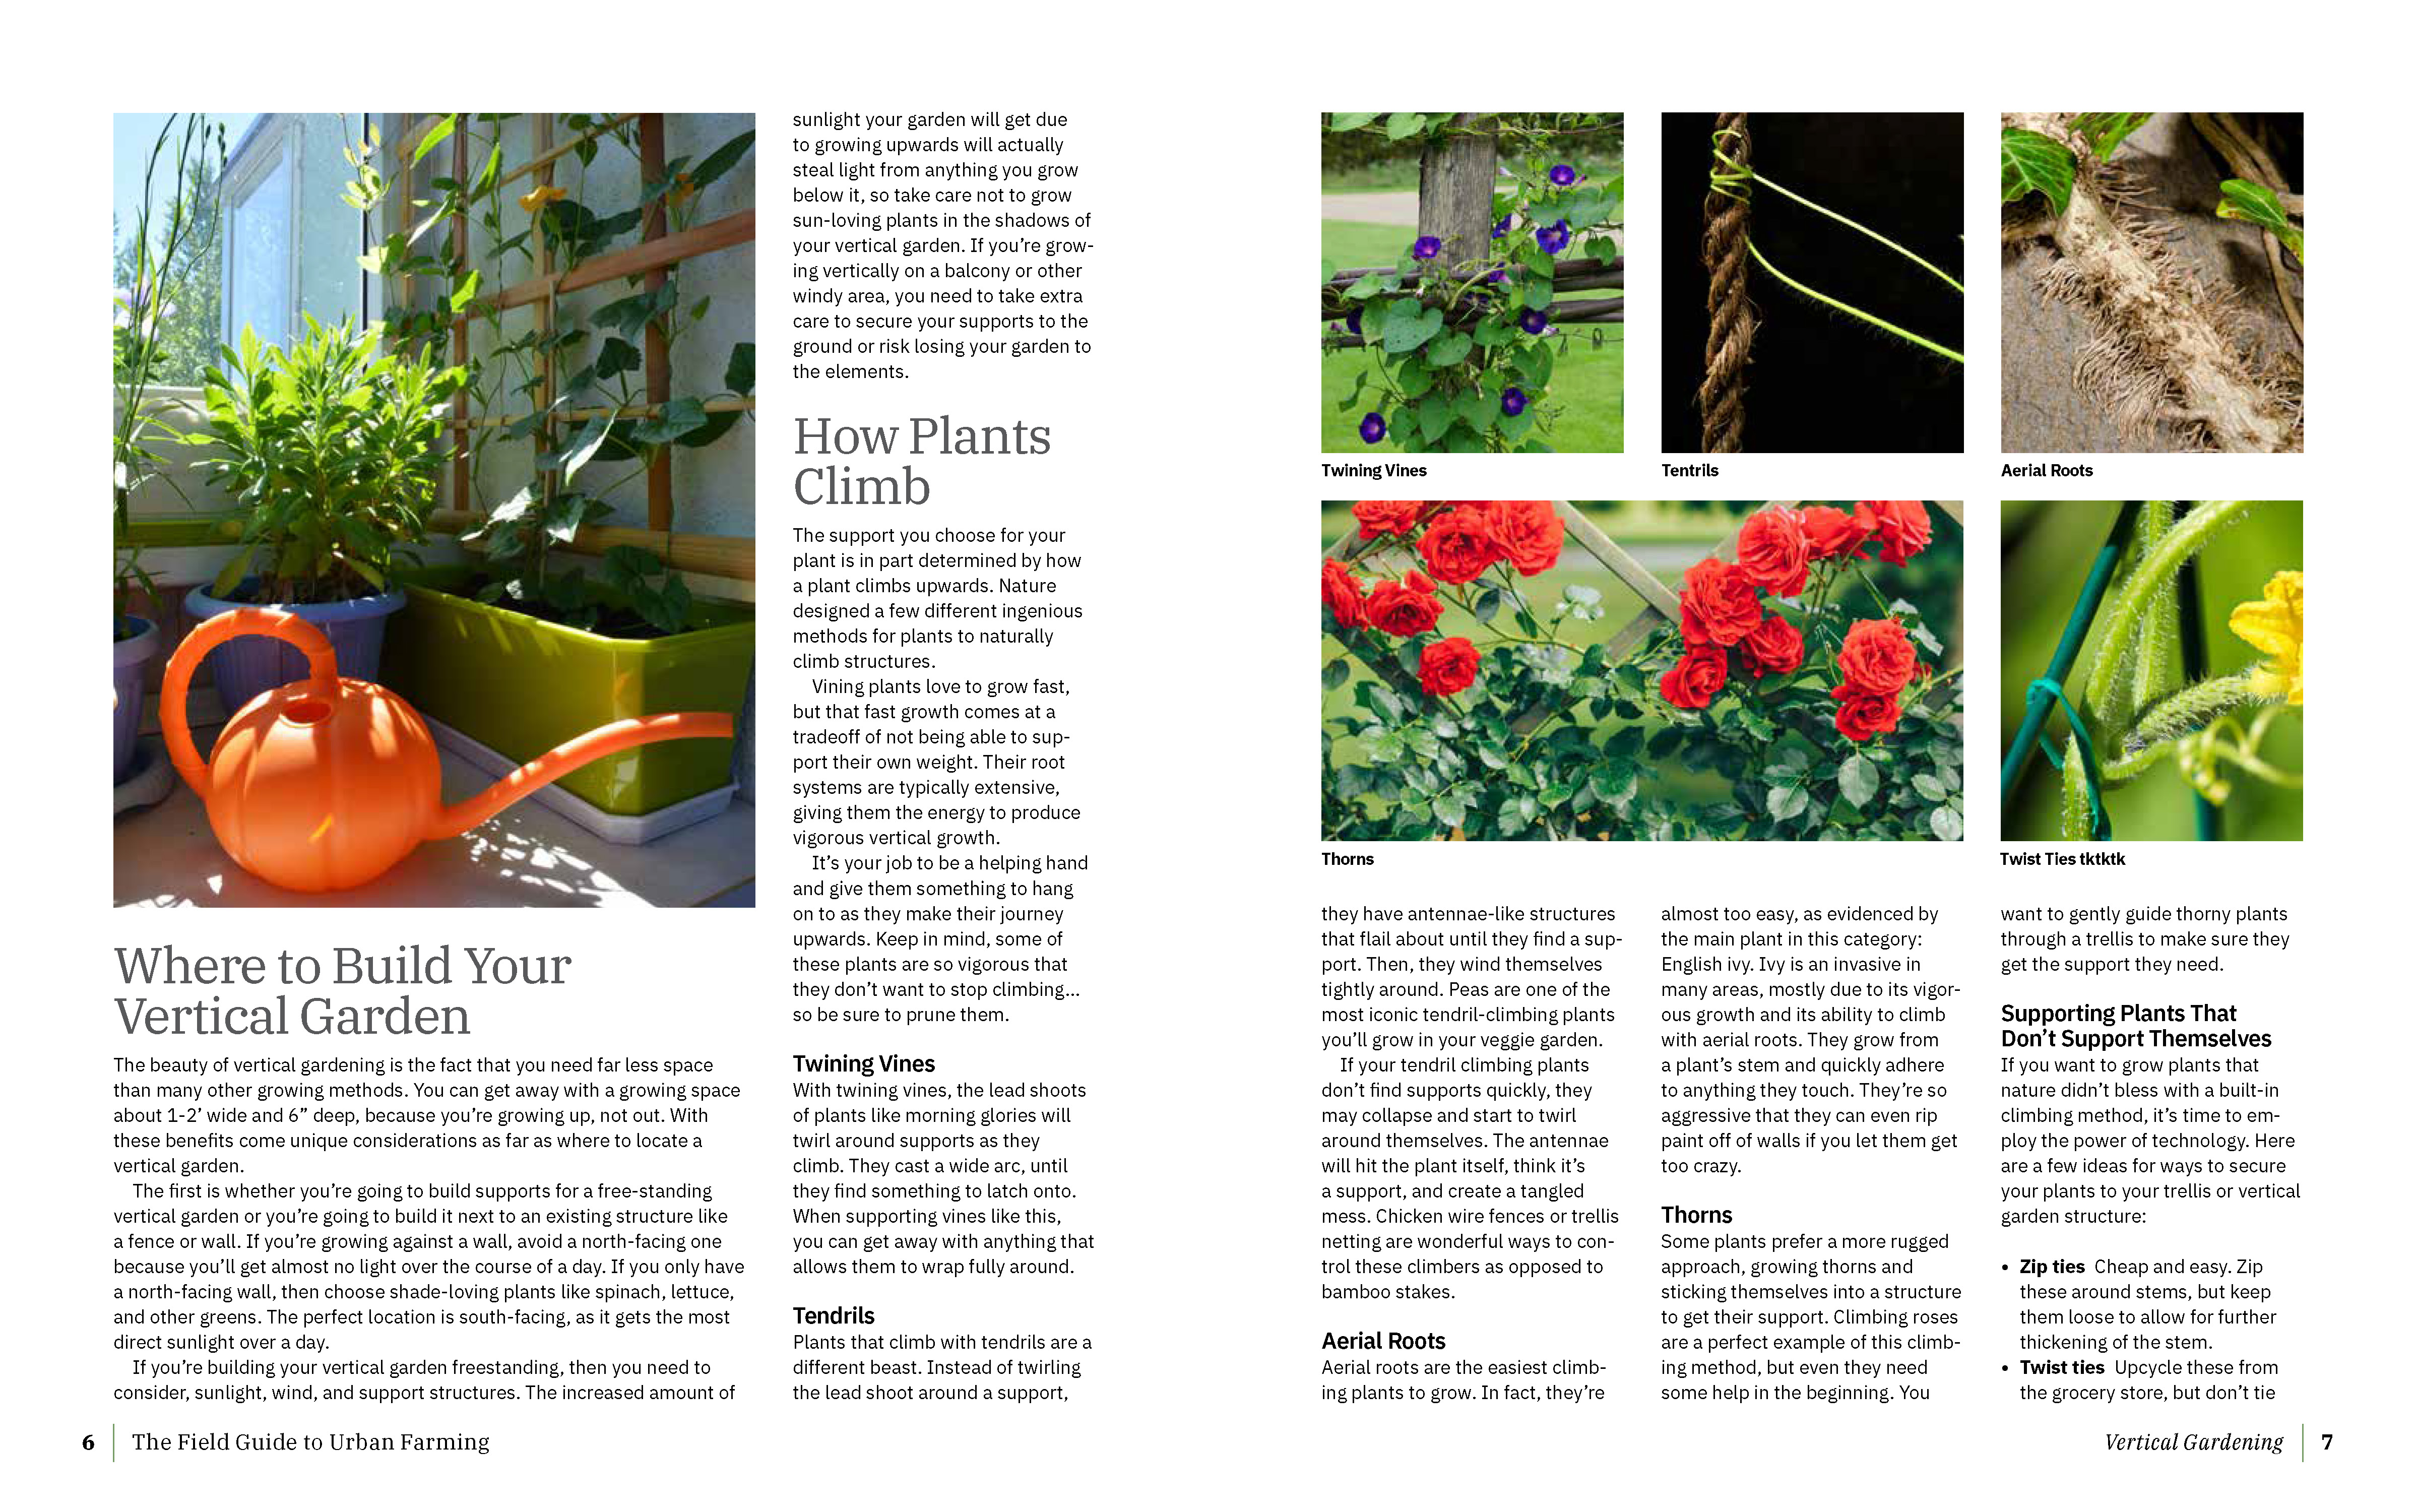 Field Guide to Urban Gardening